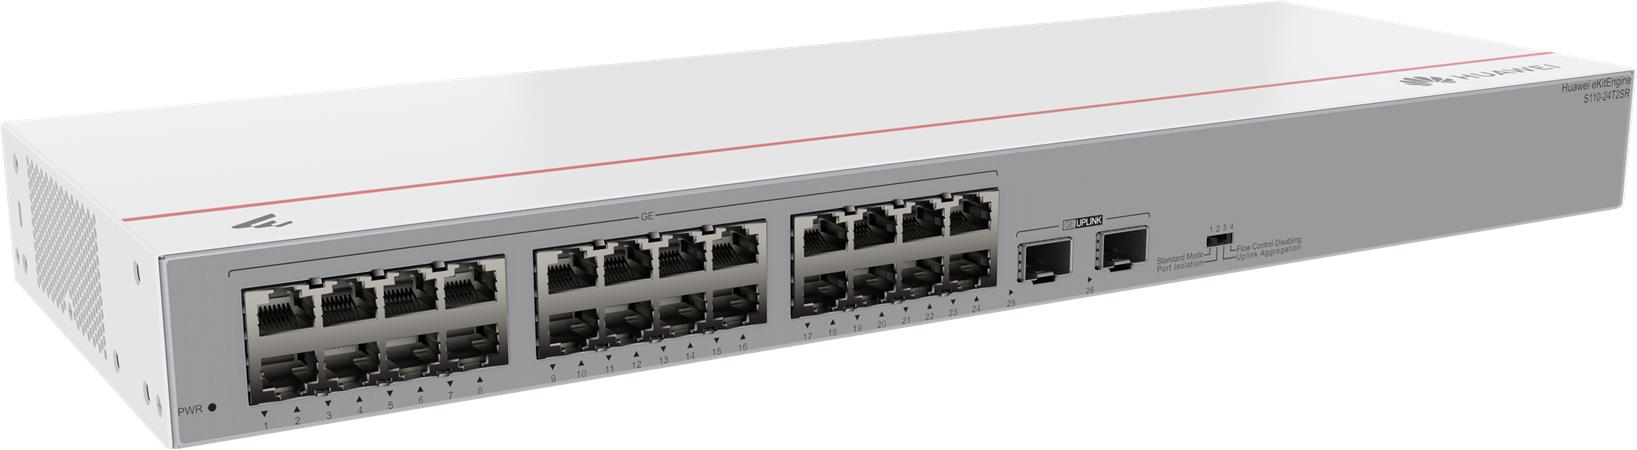 Huawei S110-24T2SR Switch (24*10/100/1000BASE-T ports, 2*GE SFP ports, AC power)